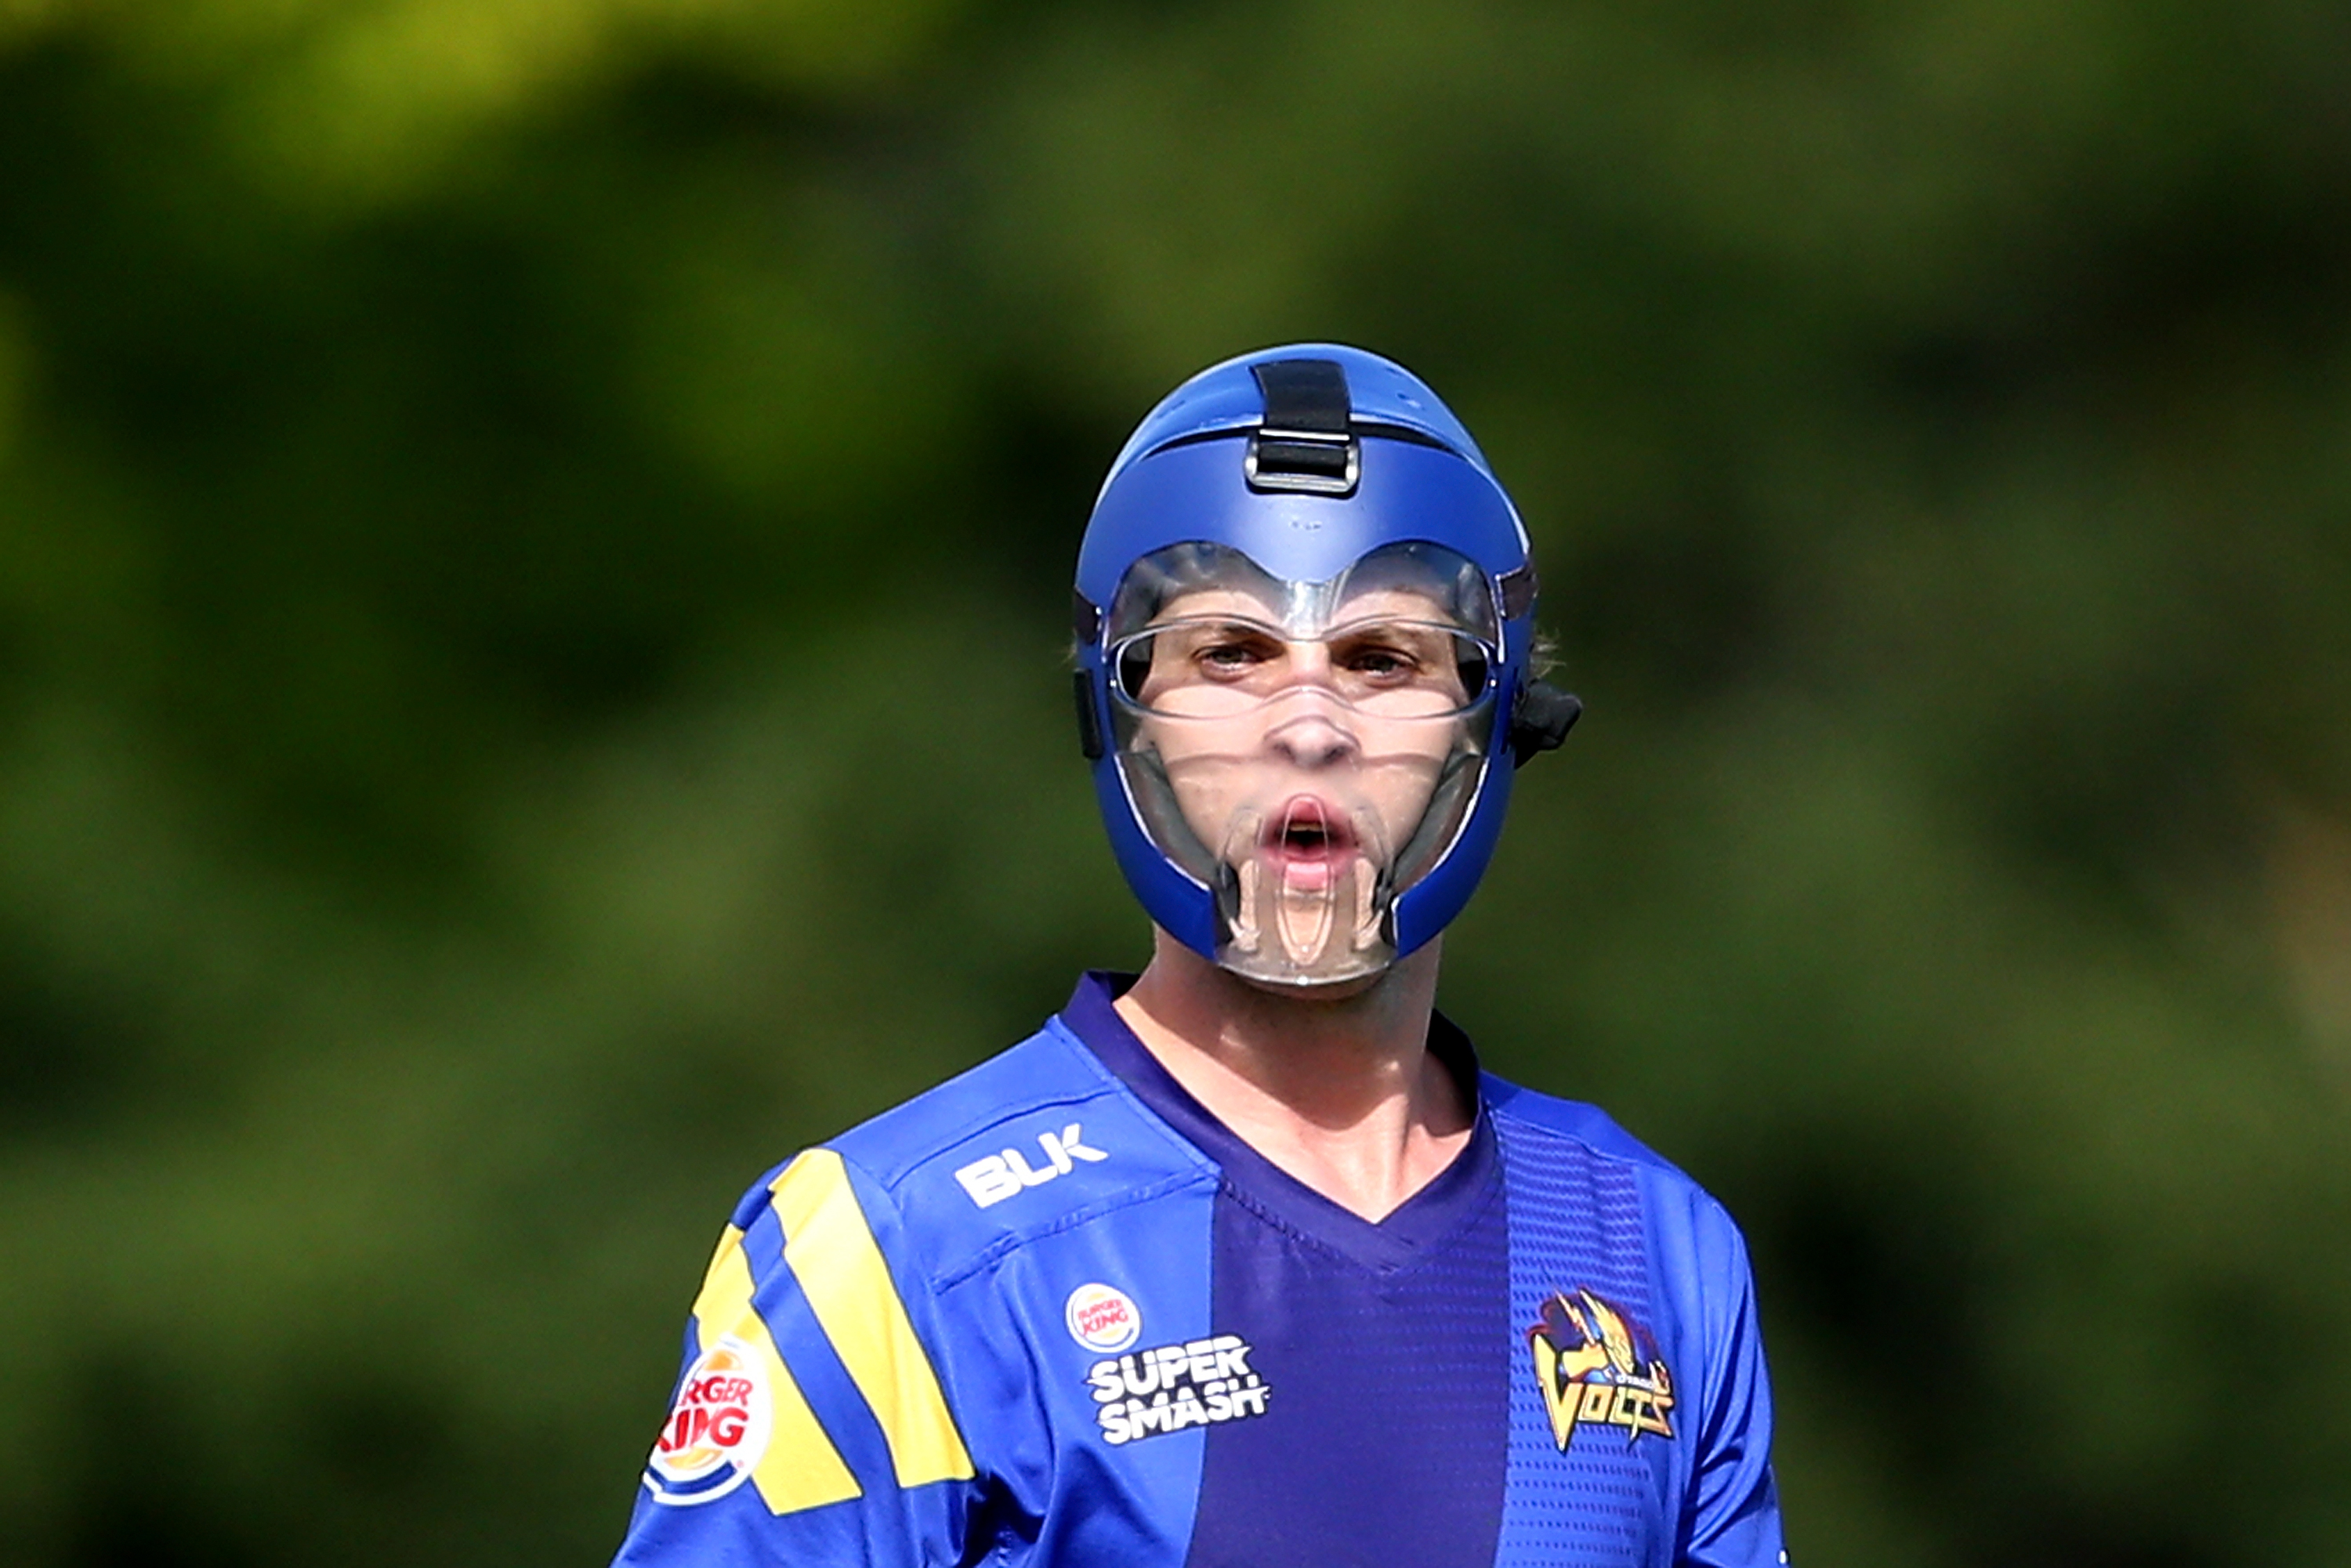 Otago pacer Warren Barnes wears protective bowling headgear during Super Smash T20